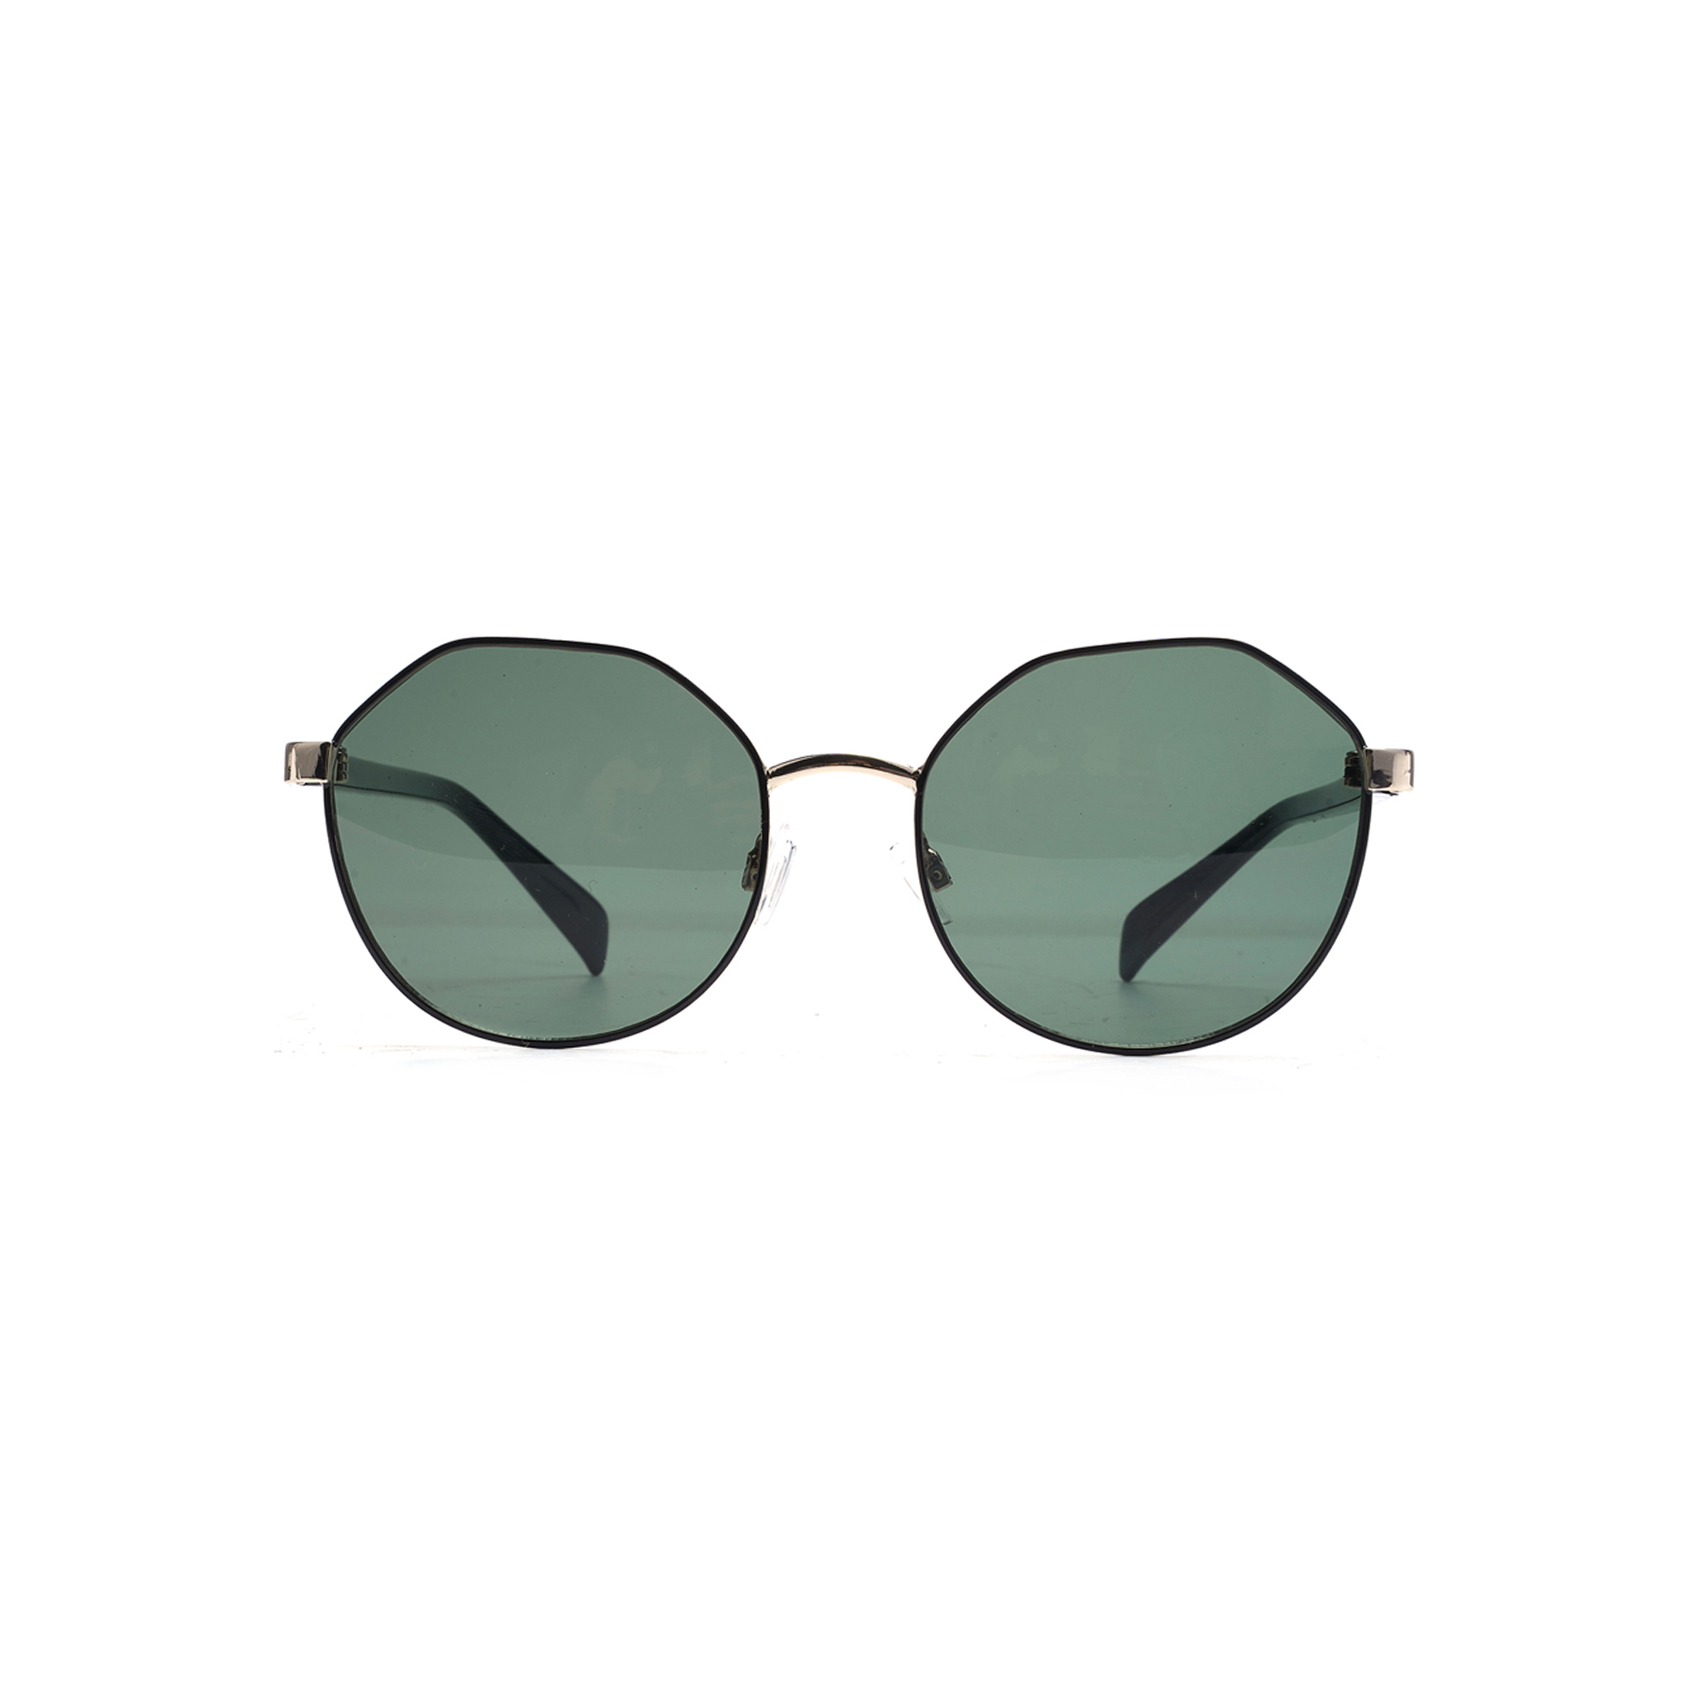 Portable Stylish Irregular Shape Sunglasses Forever New Sunglasses